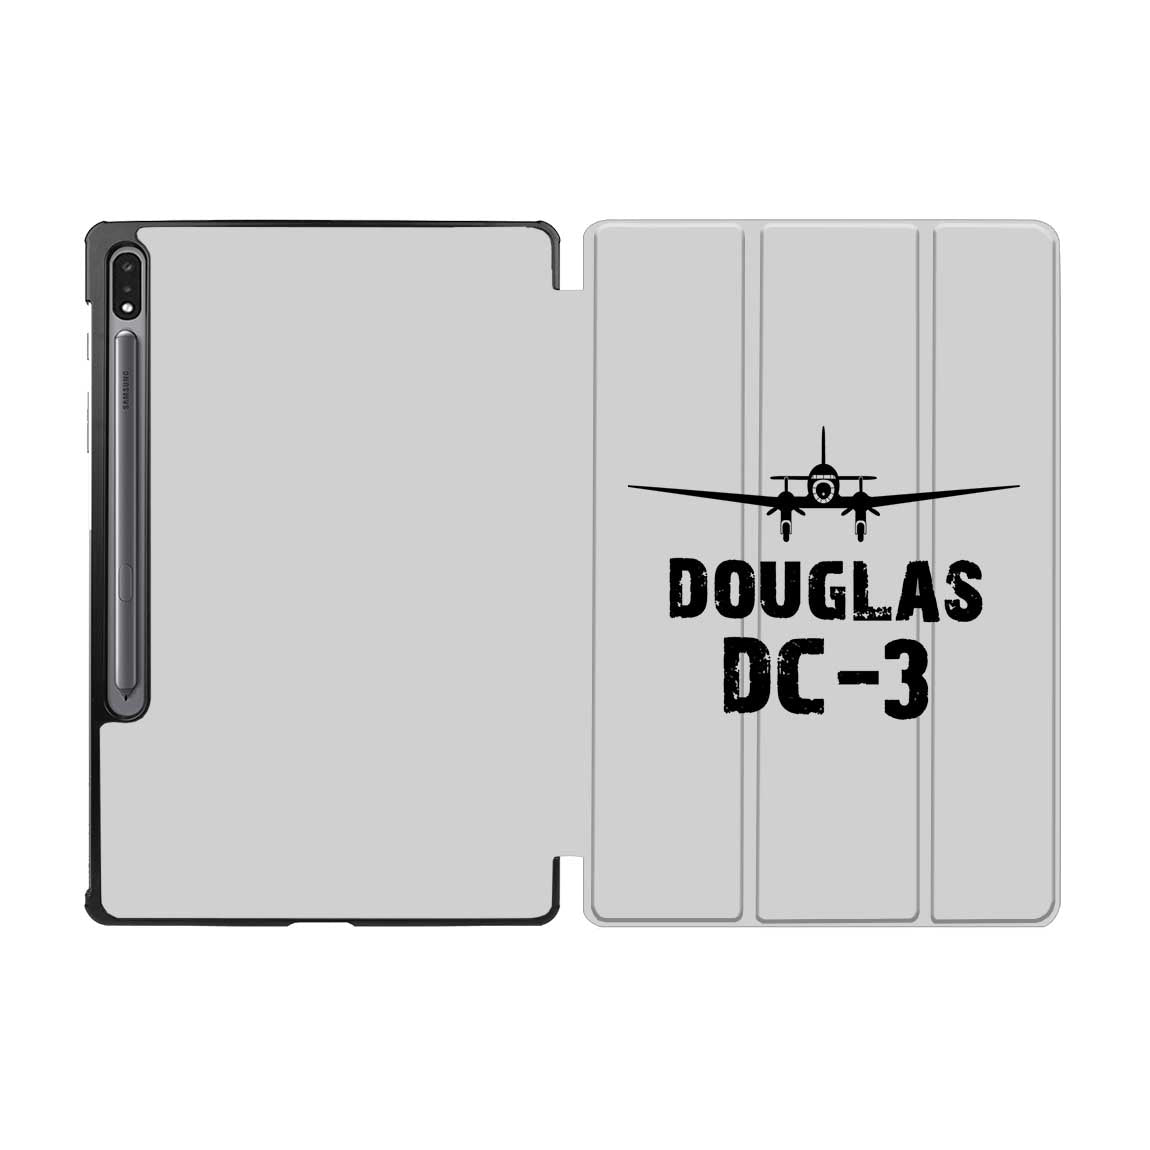 Douglas DC-3 & Plane Designed Samsung Tablet Cases